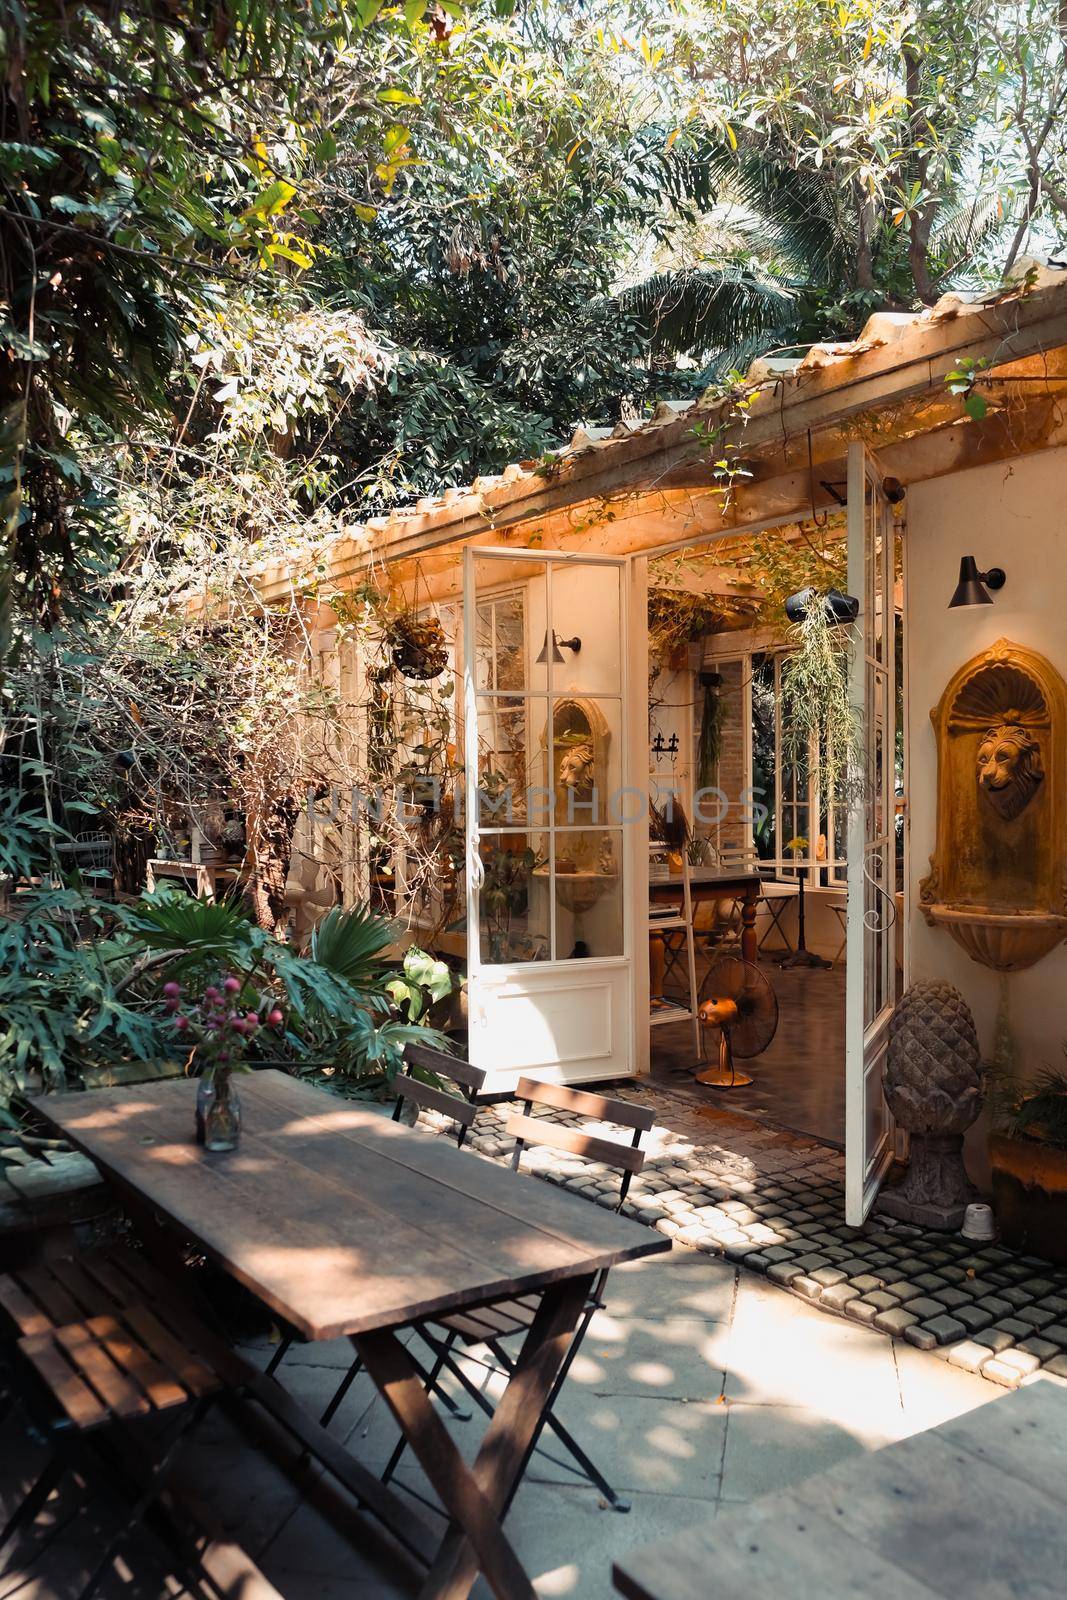 Image of Vintage Dining Room in garden